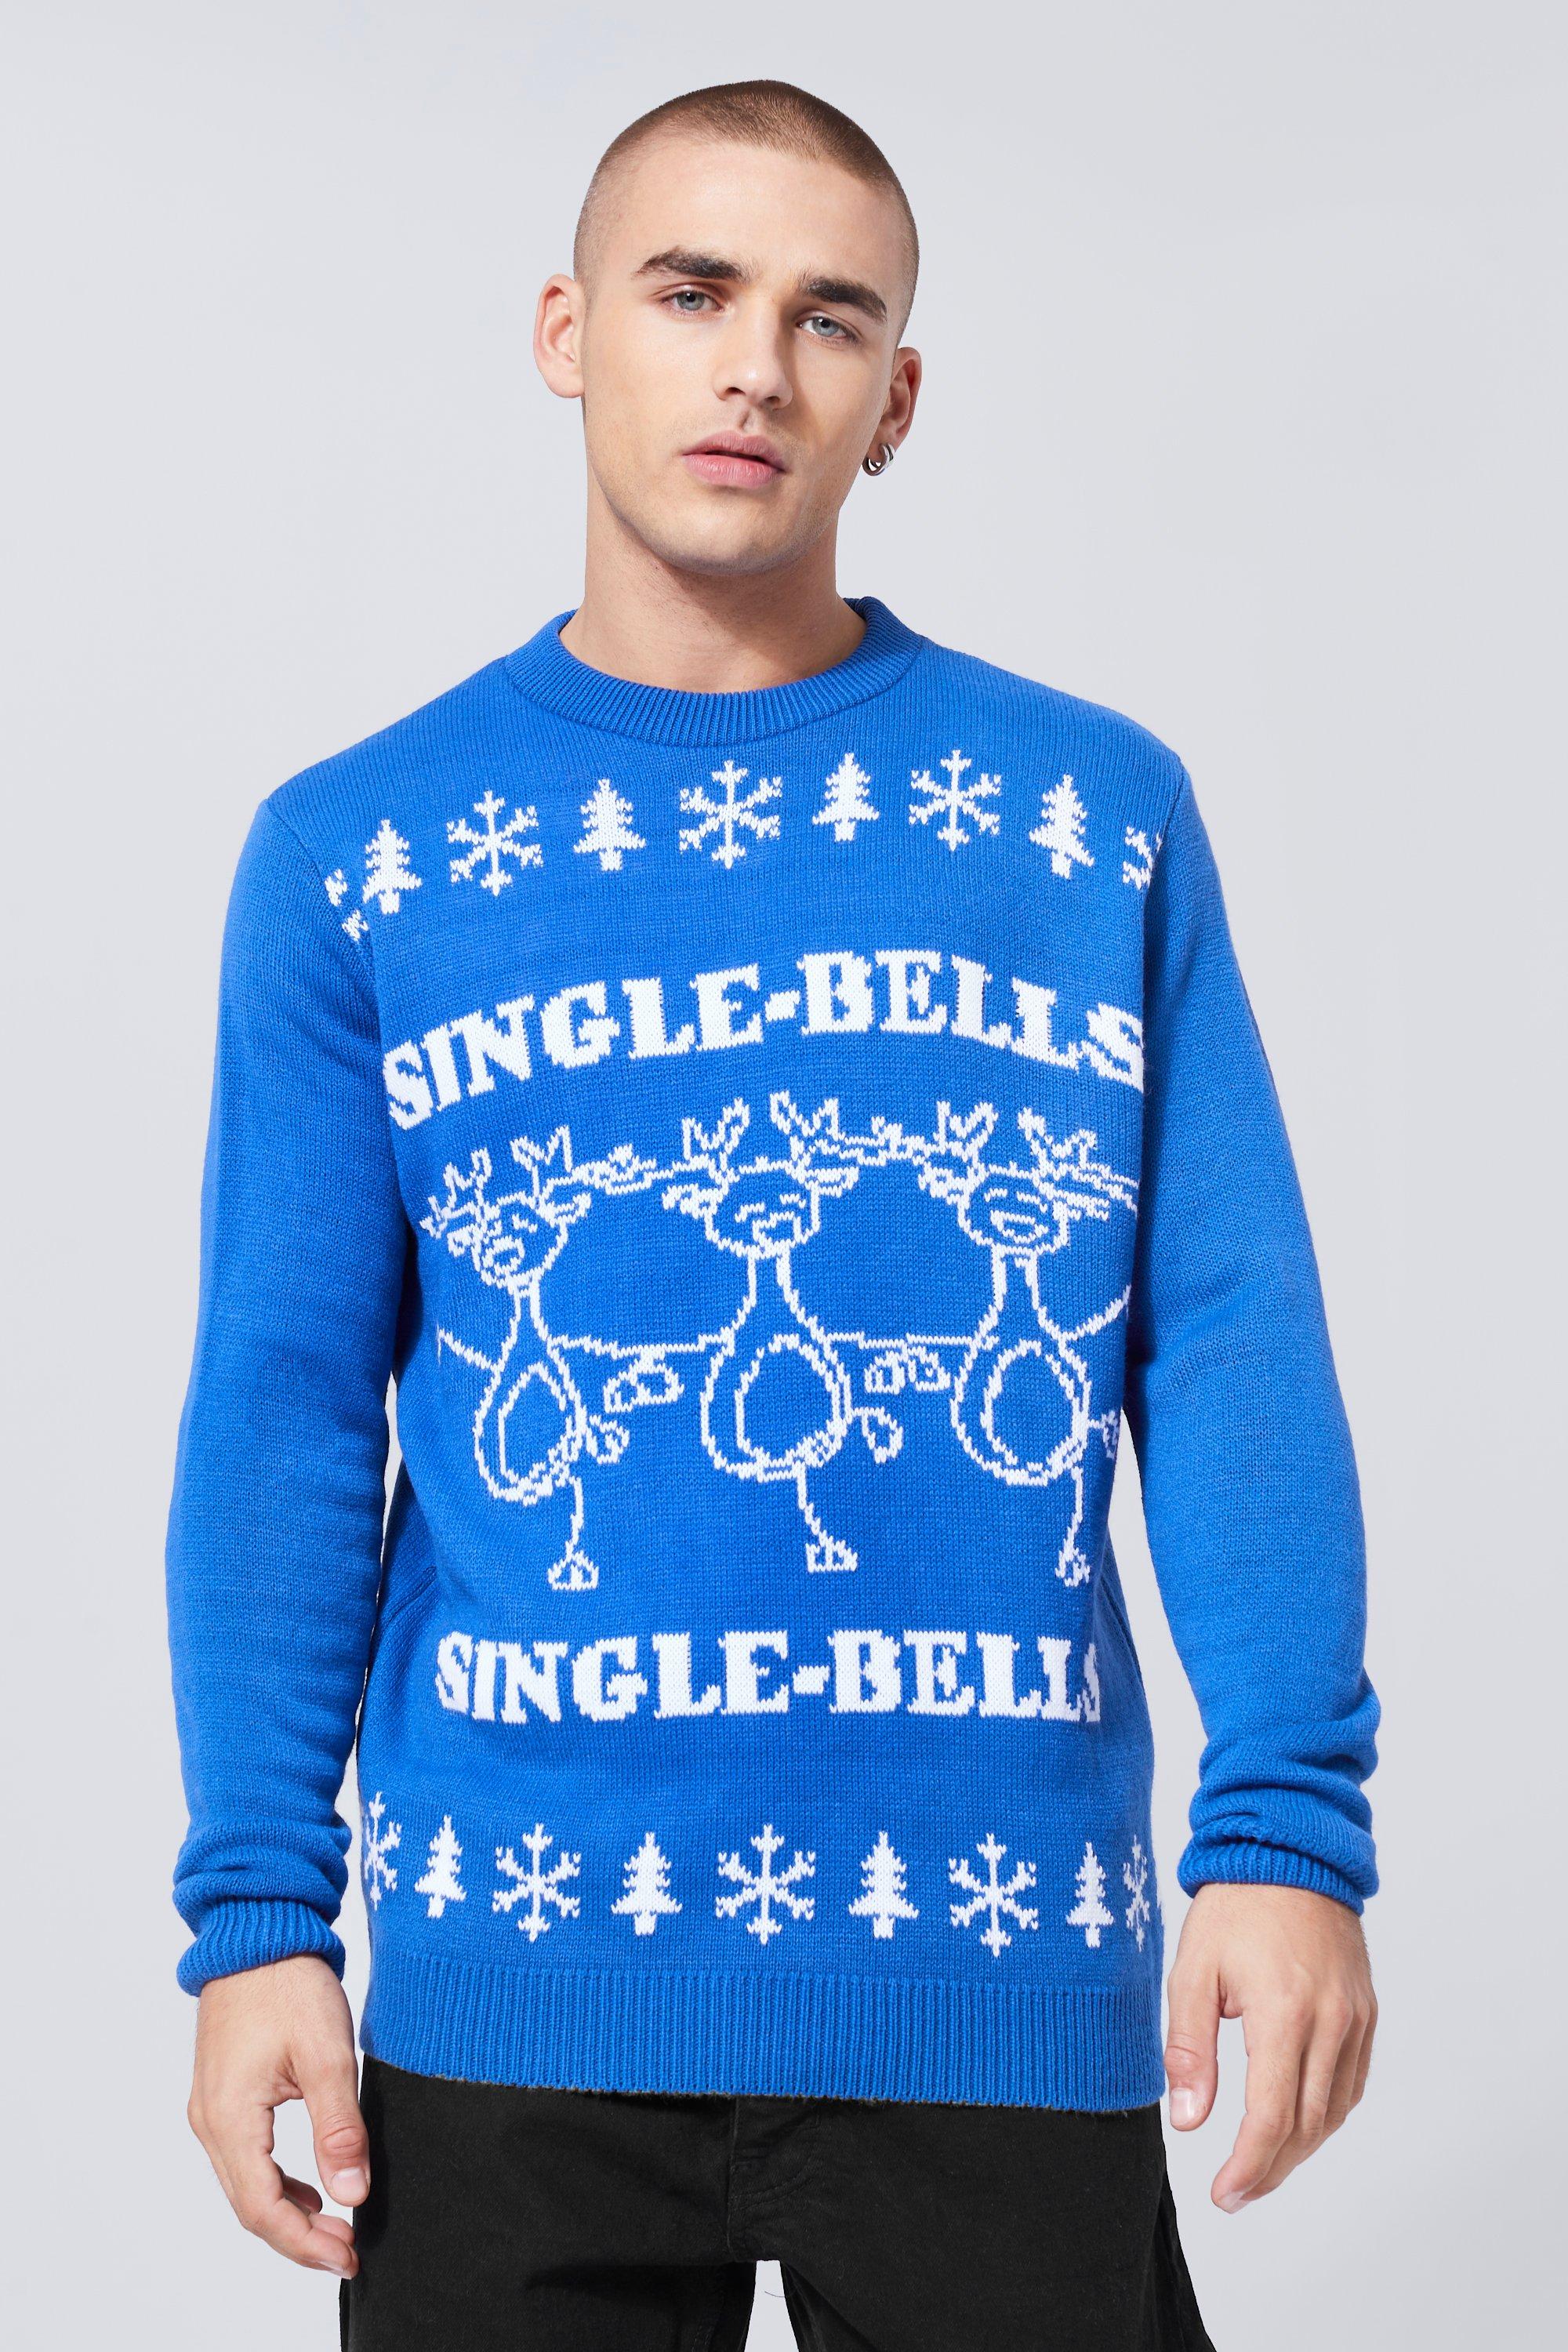 Image of Maglione natalizio con slogan Single Bells, Navy